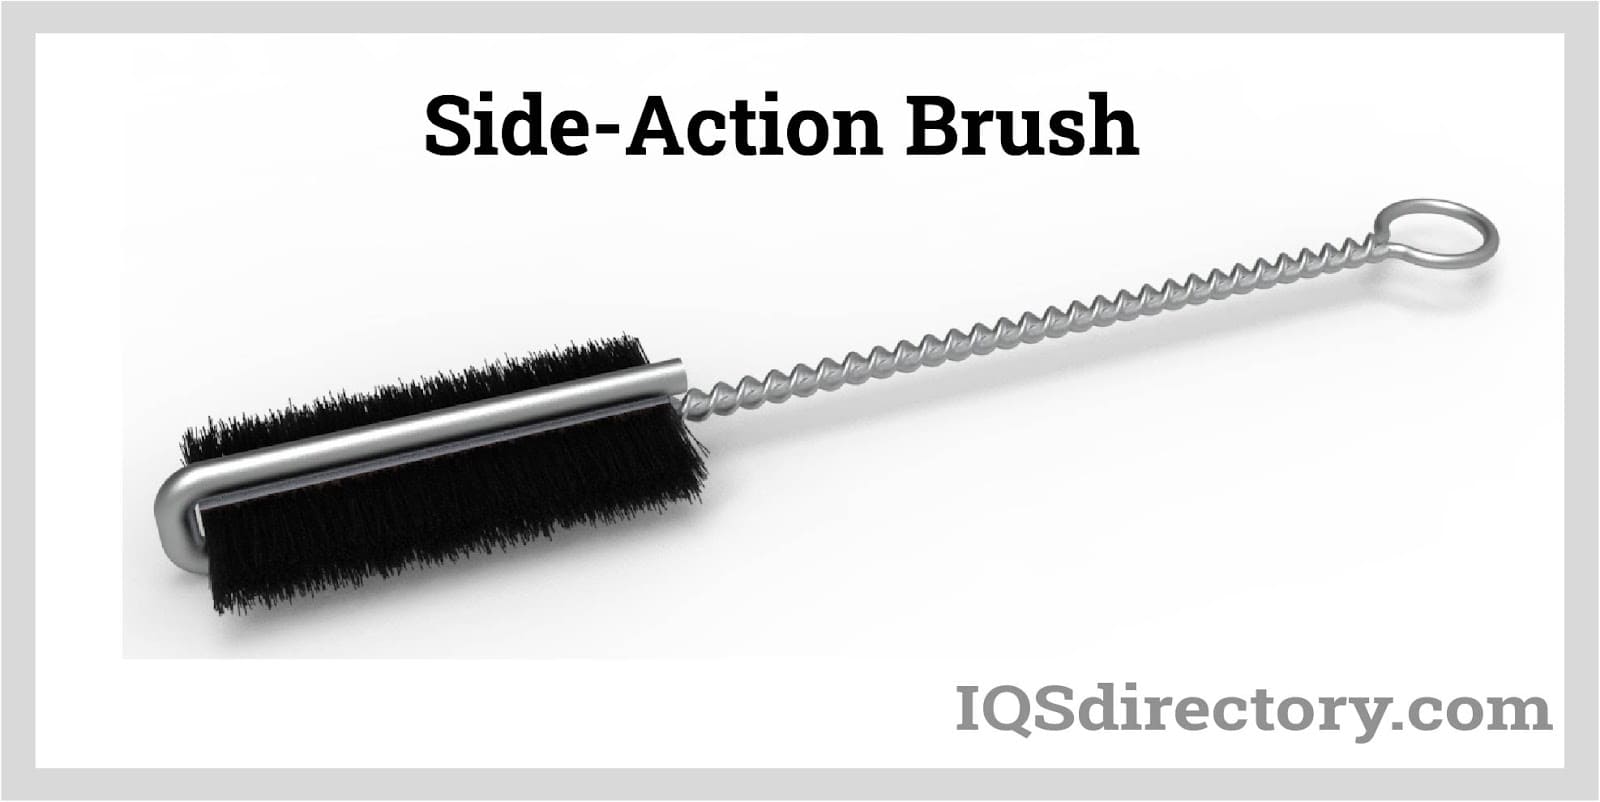 Plastic Handle Black Bristle Chip Brush - Justman Brush Company